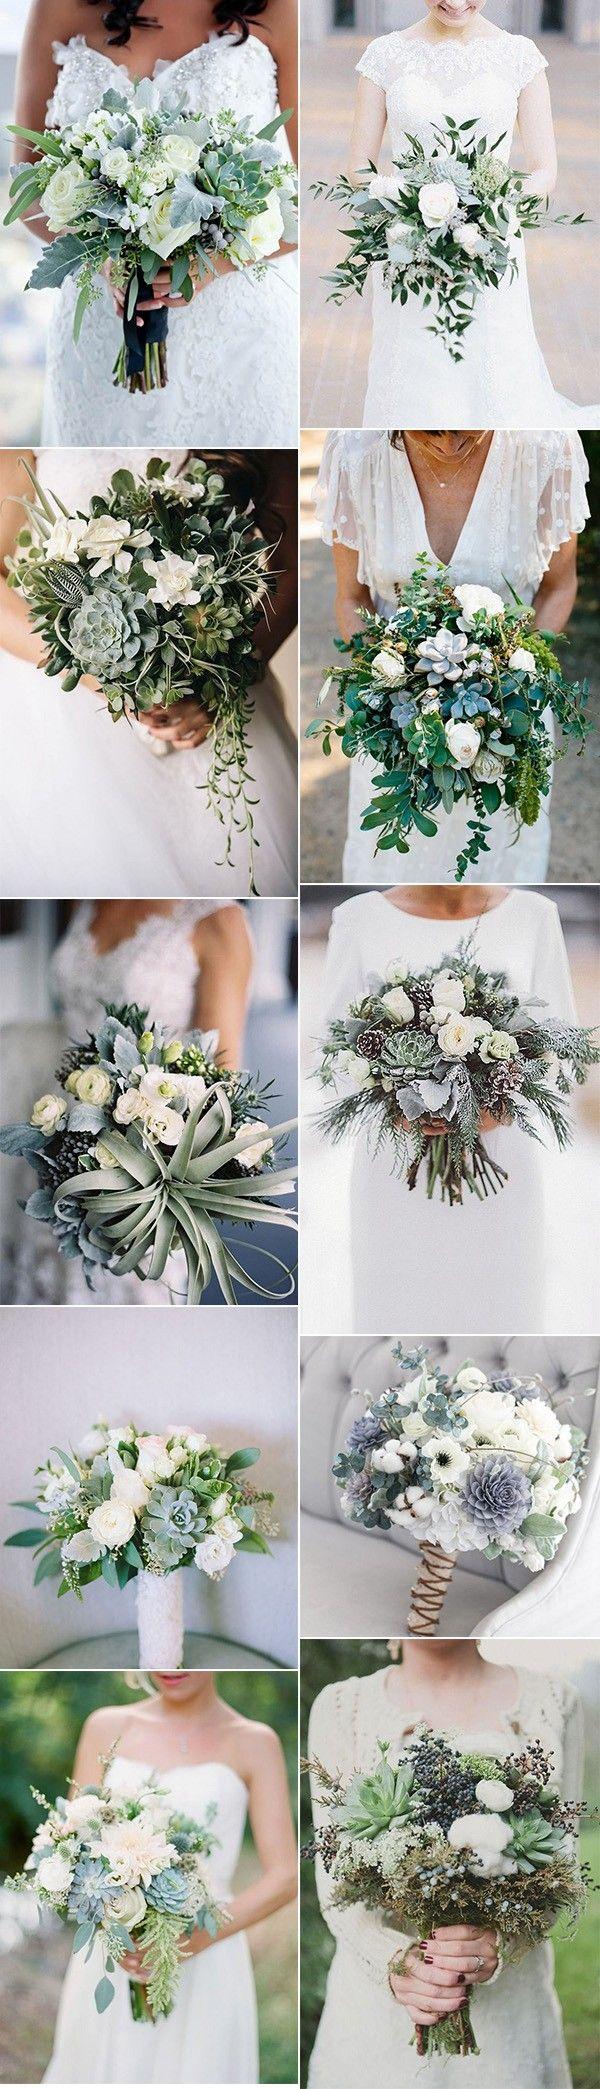 Wedding - 20 Trending Wedding Bouquet Ideas With Succulents